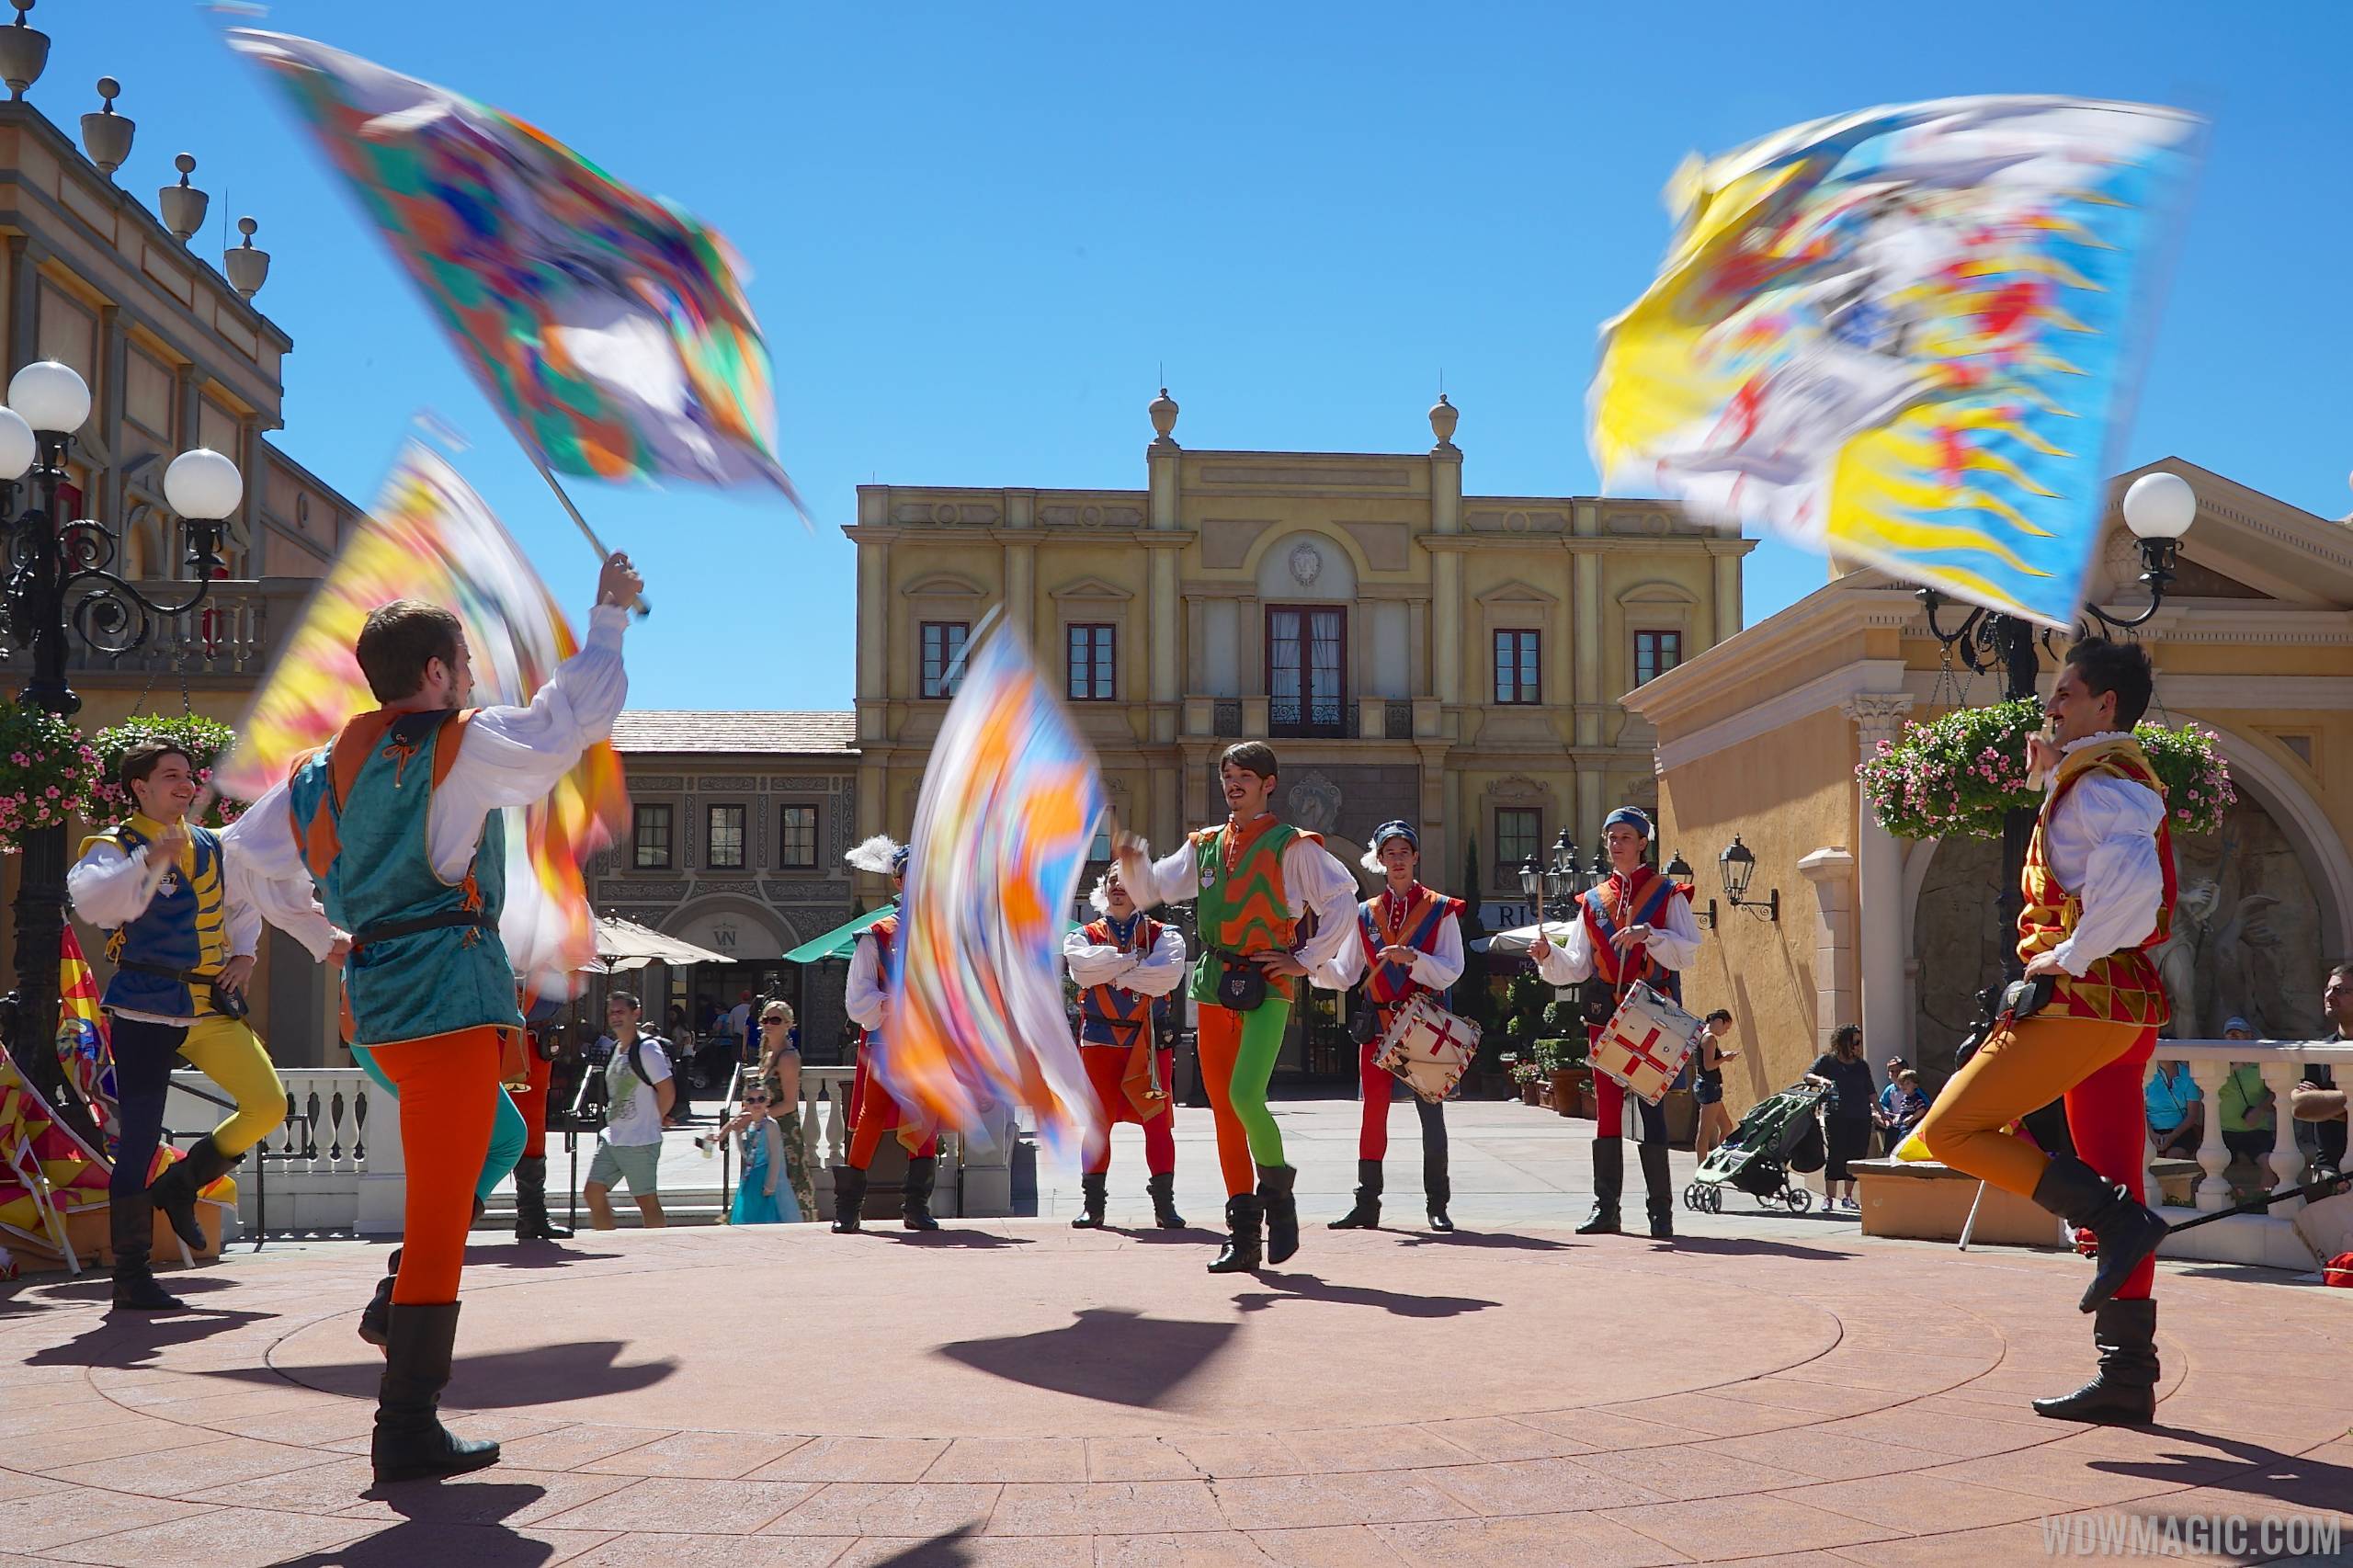 PHOTOS and VIDEO - Sbandieratori Di Sansepolcro - Italy's new flag waving act opens at Epcot